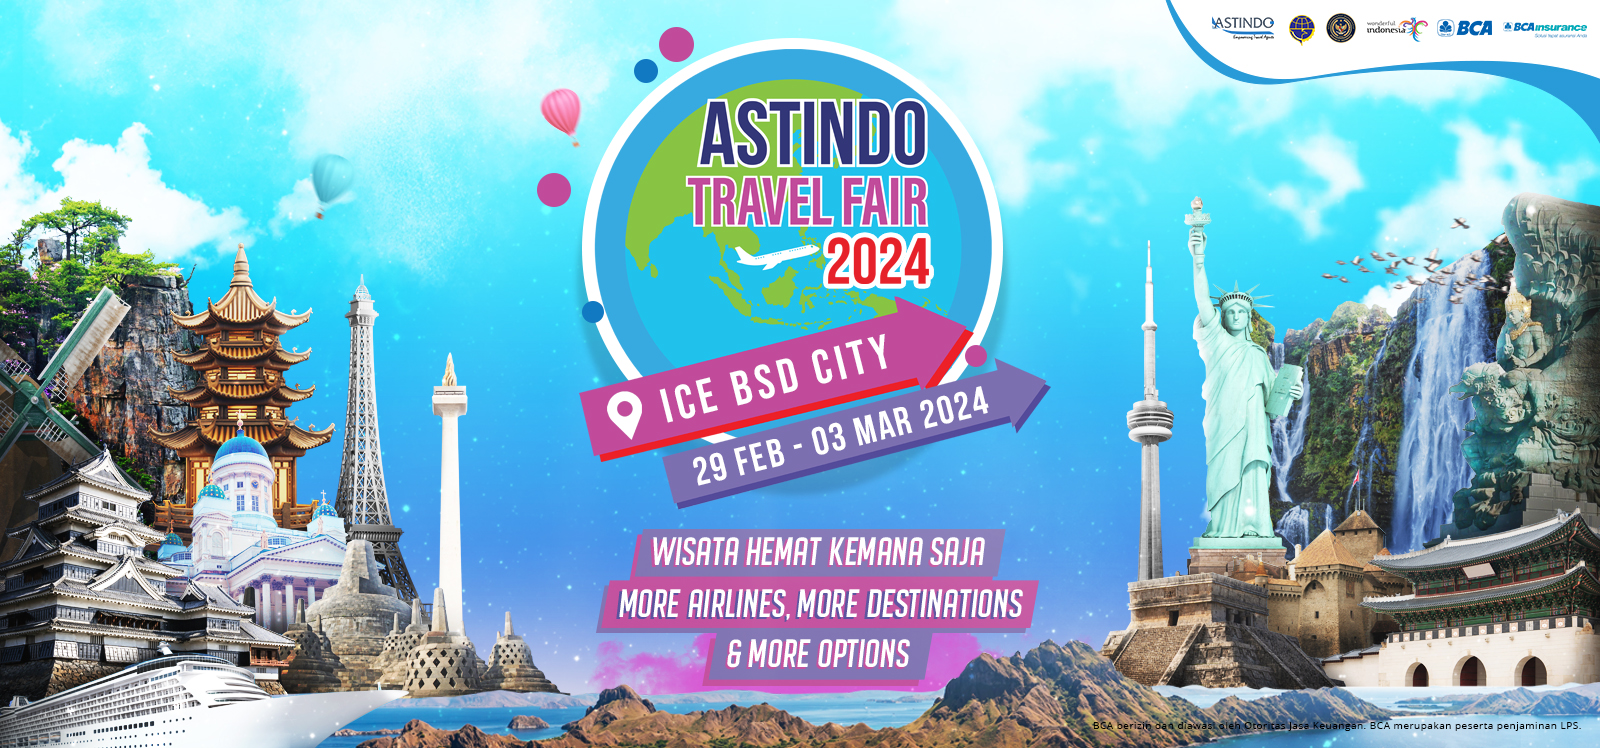 Astindo Travel Fair 2024